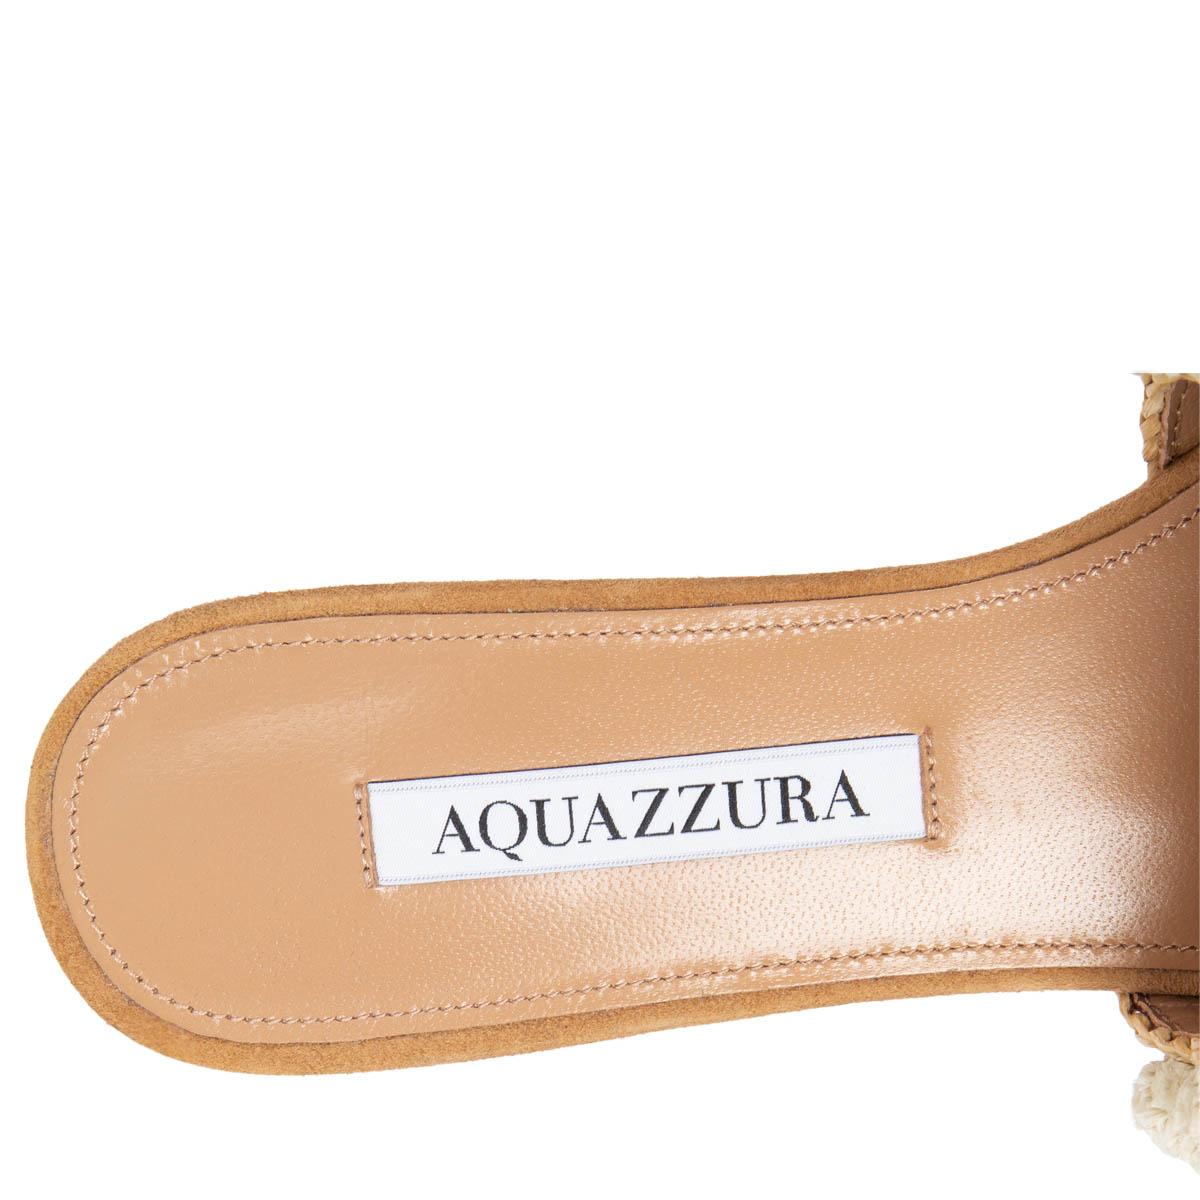 AQUAZZURA natural beige RAFFIA POMPOM Slides Flat Sandals Shoes 36 For Sale 1